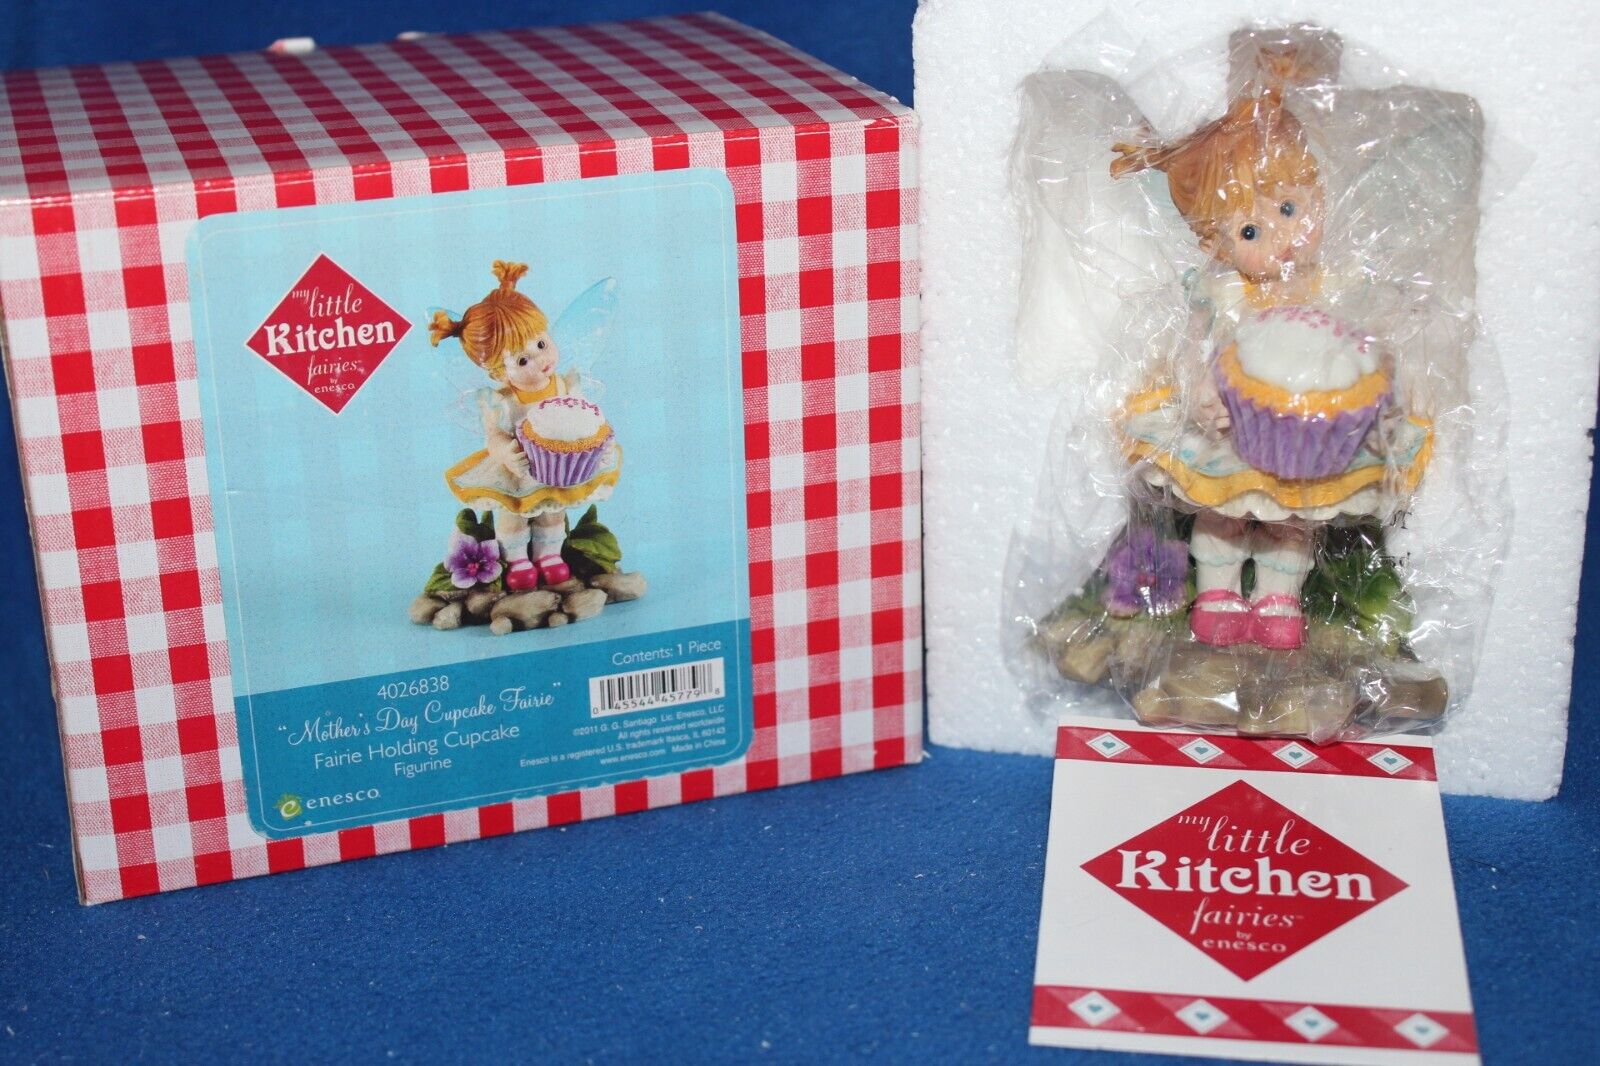 My Little Kitchen Fairies \'Mother\'s Day Cupcake Fairie\' 4026838 Enesco - NEW